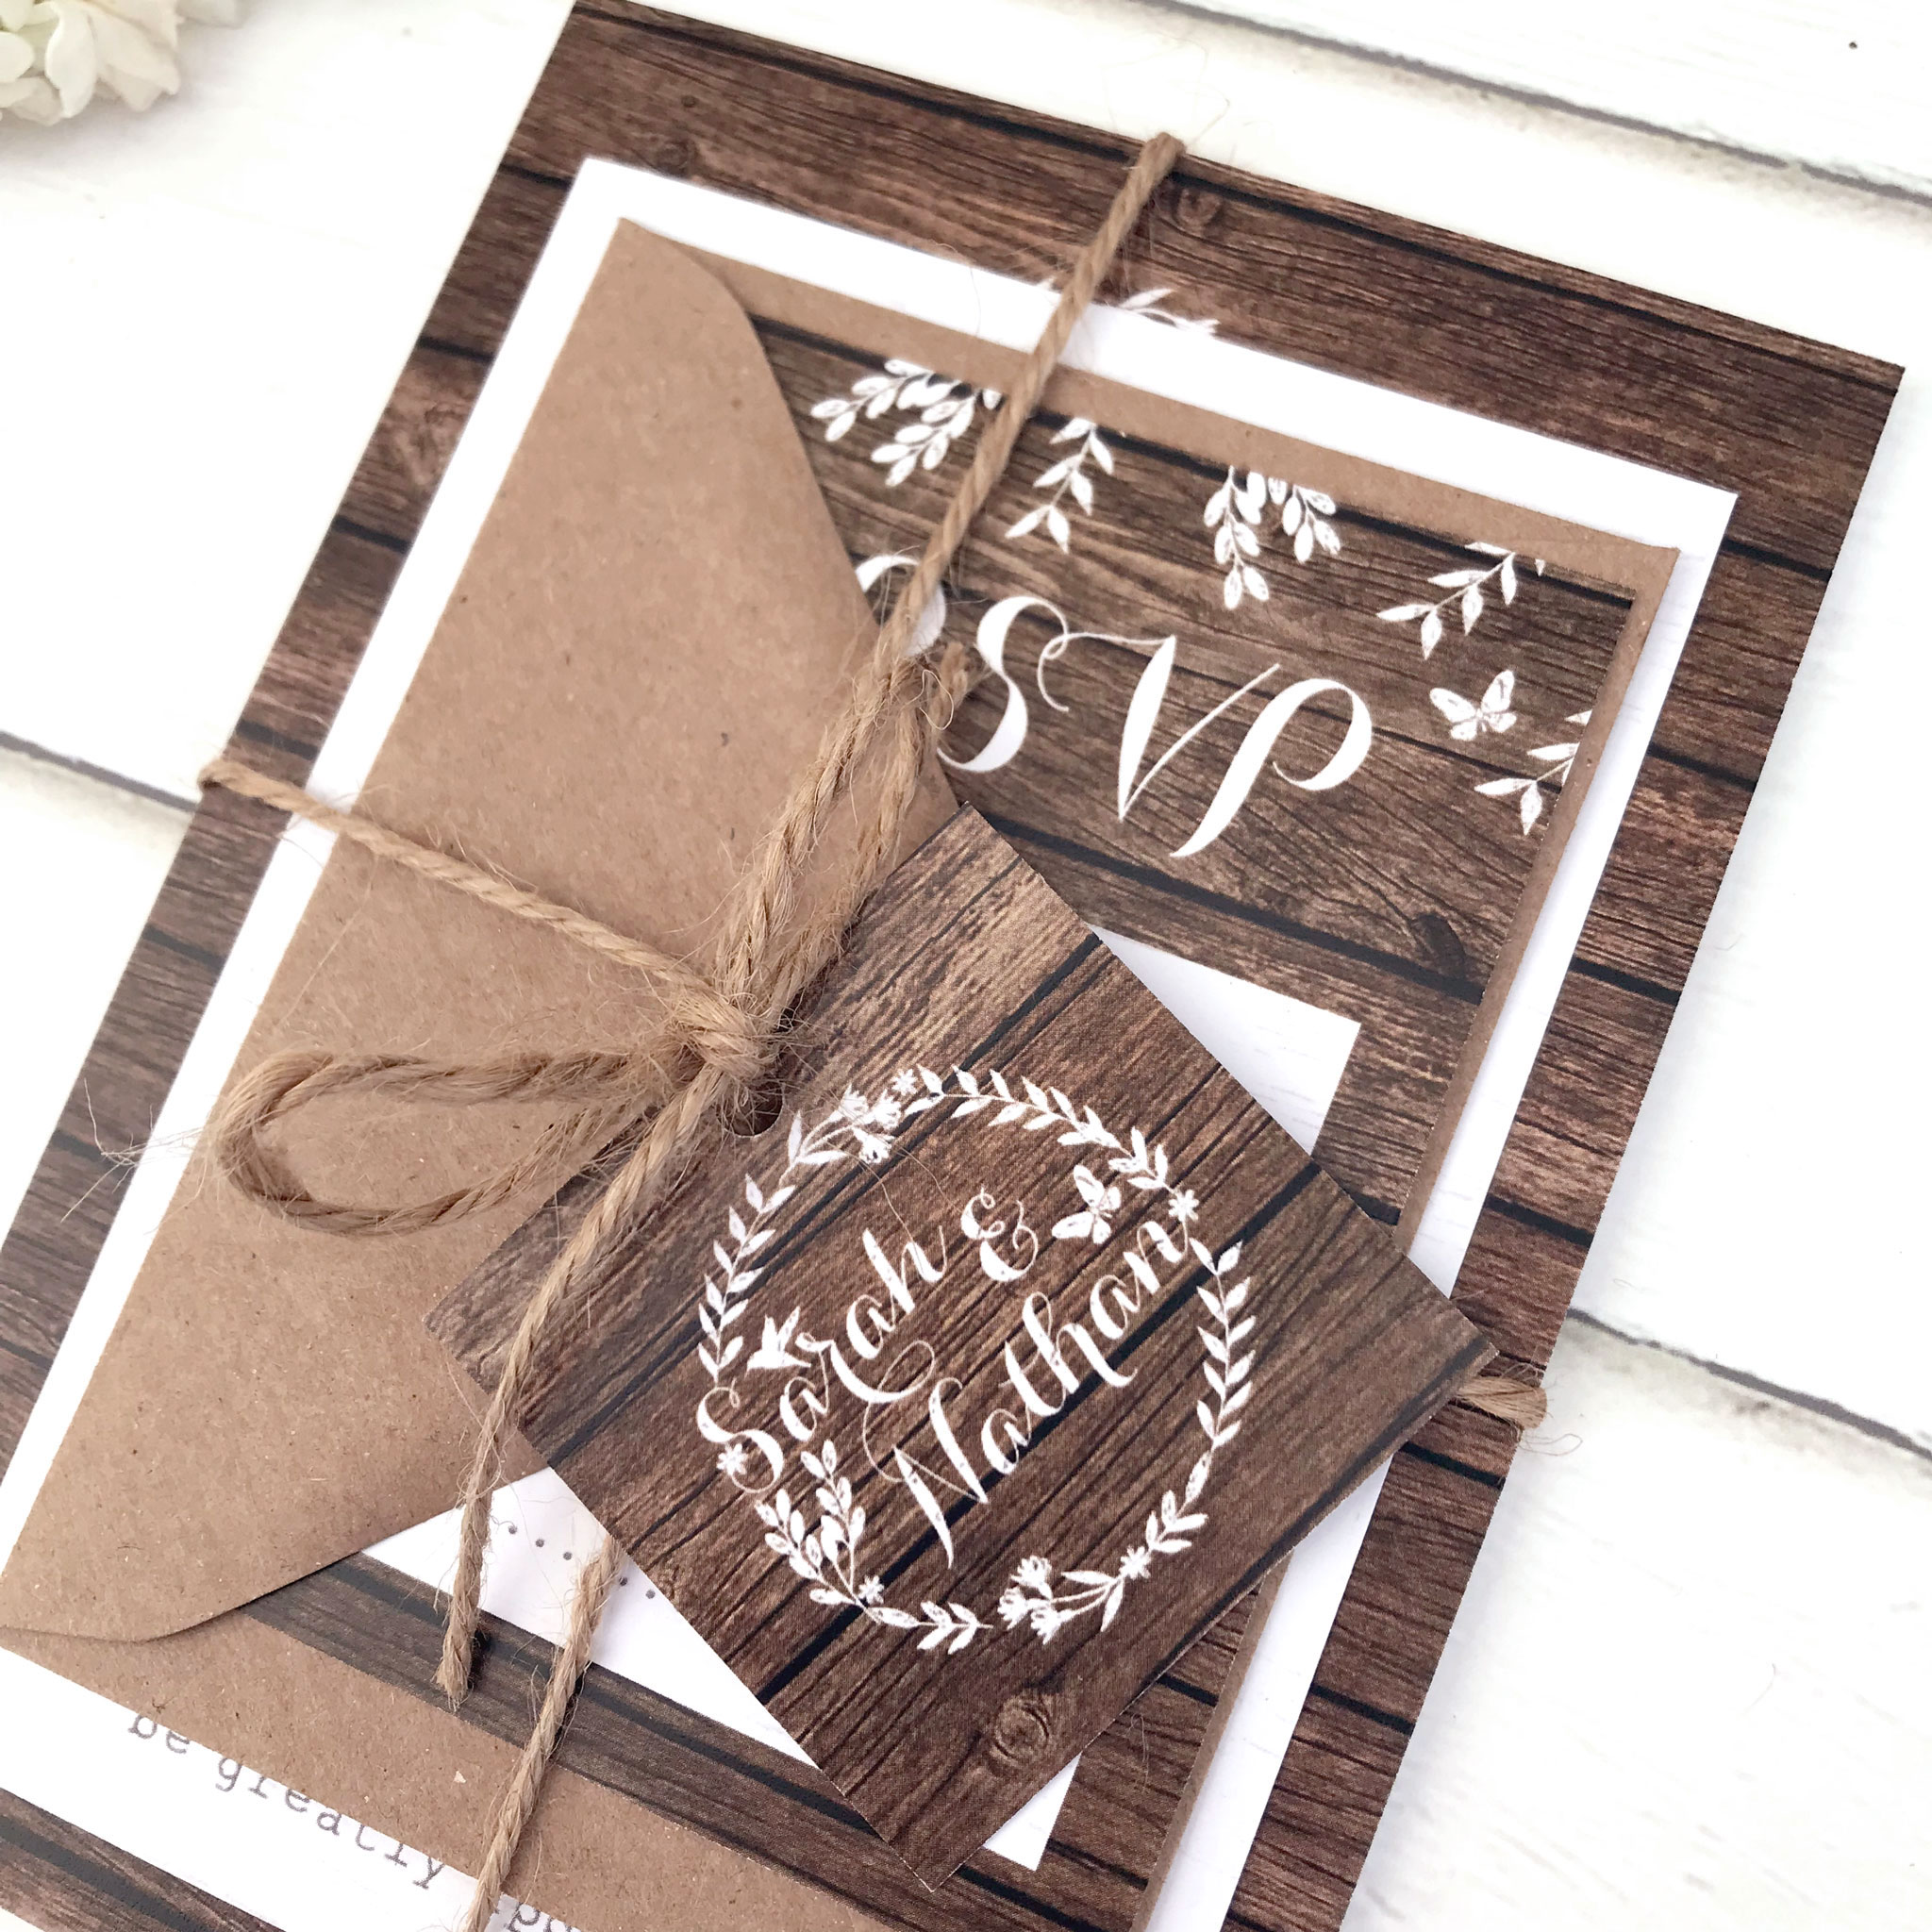 Rustic Barn Wedding Invitation | Heart Invites | Beautiful Personalised Wedding Stationery